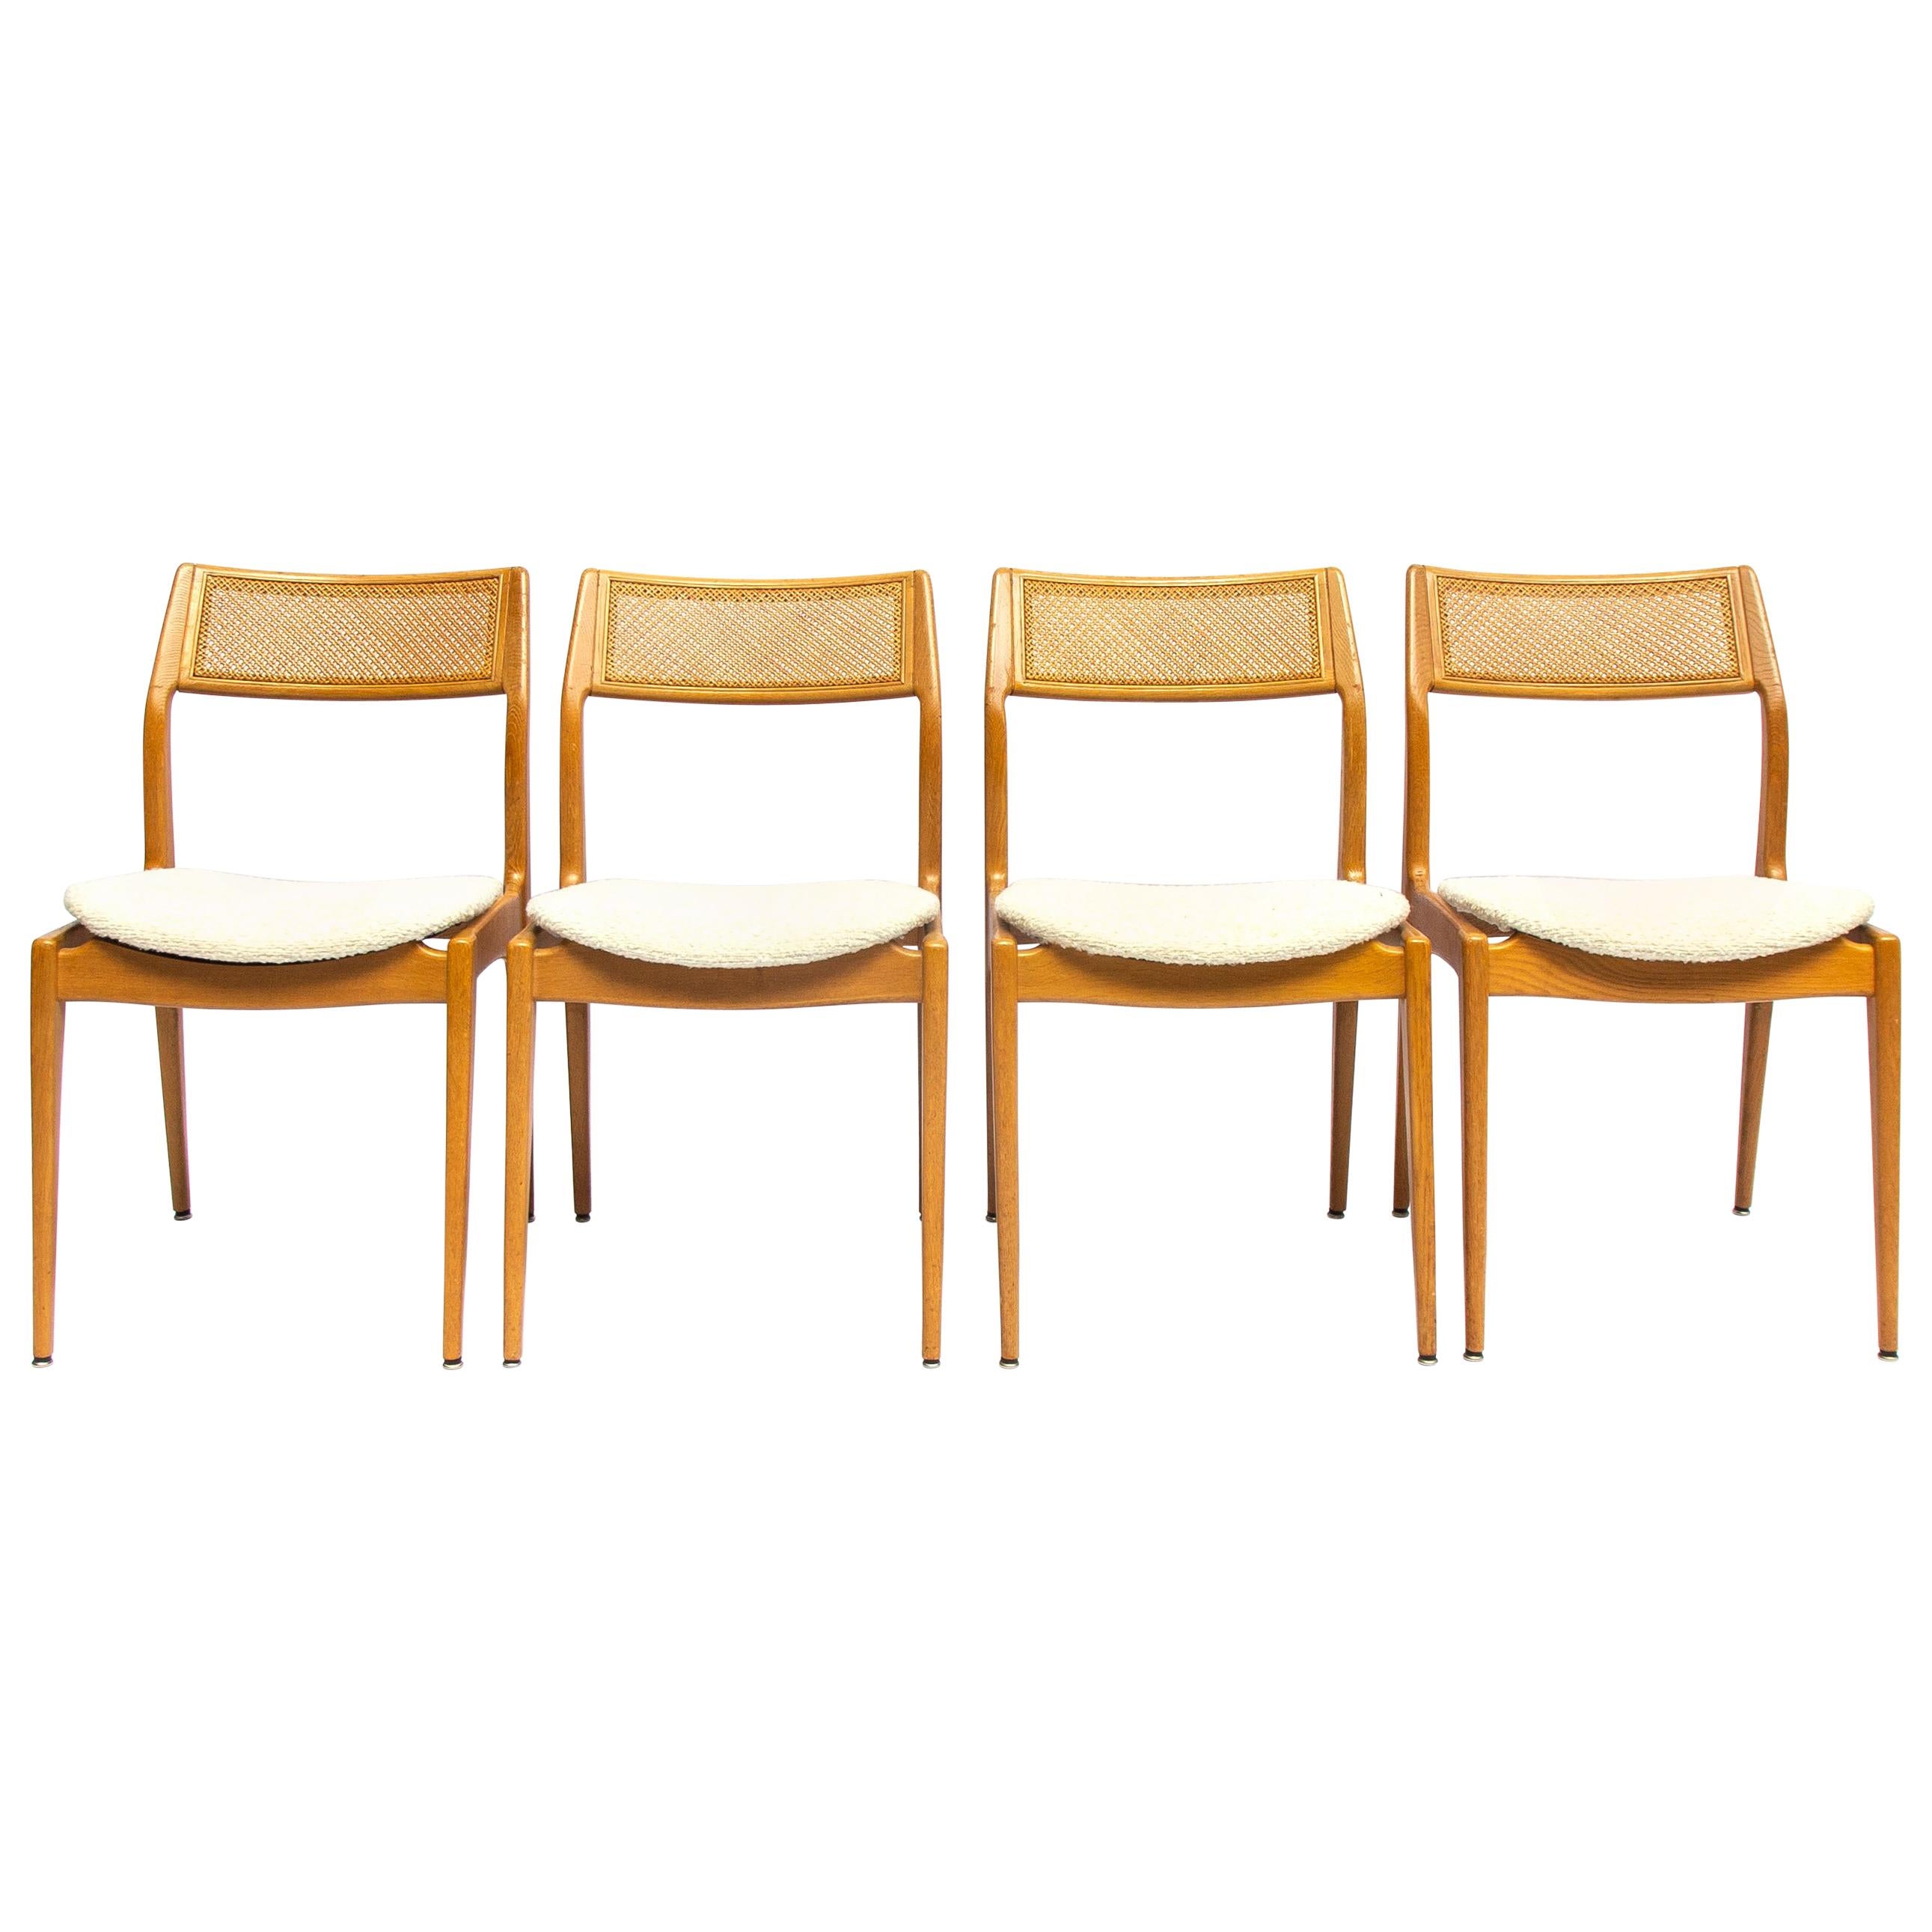 Set of Four Danisch Midcentury Oak Dining Chairs, 1950s